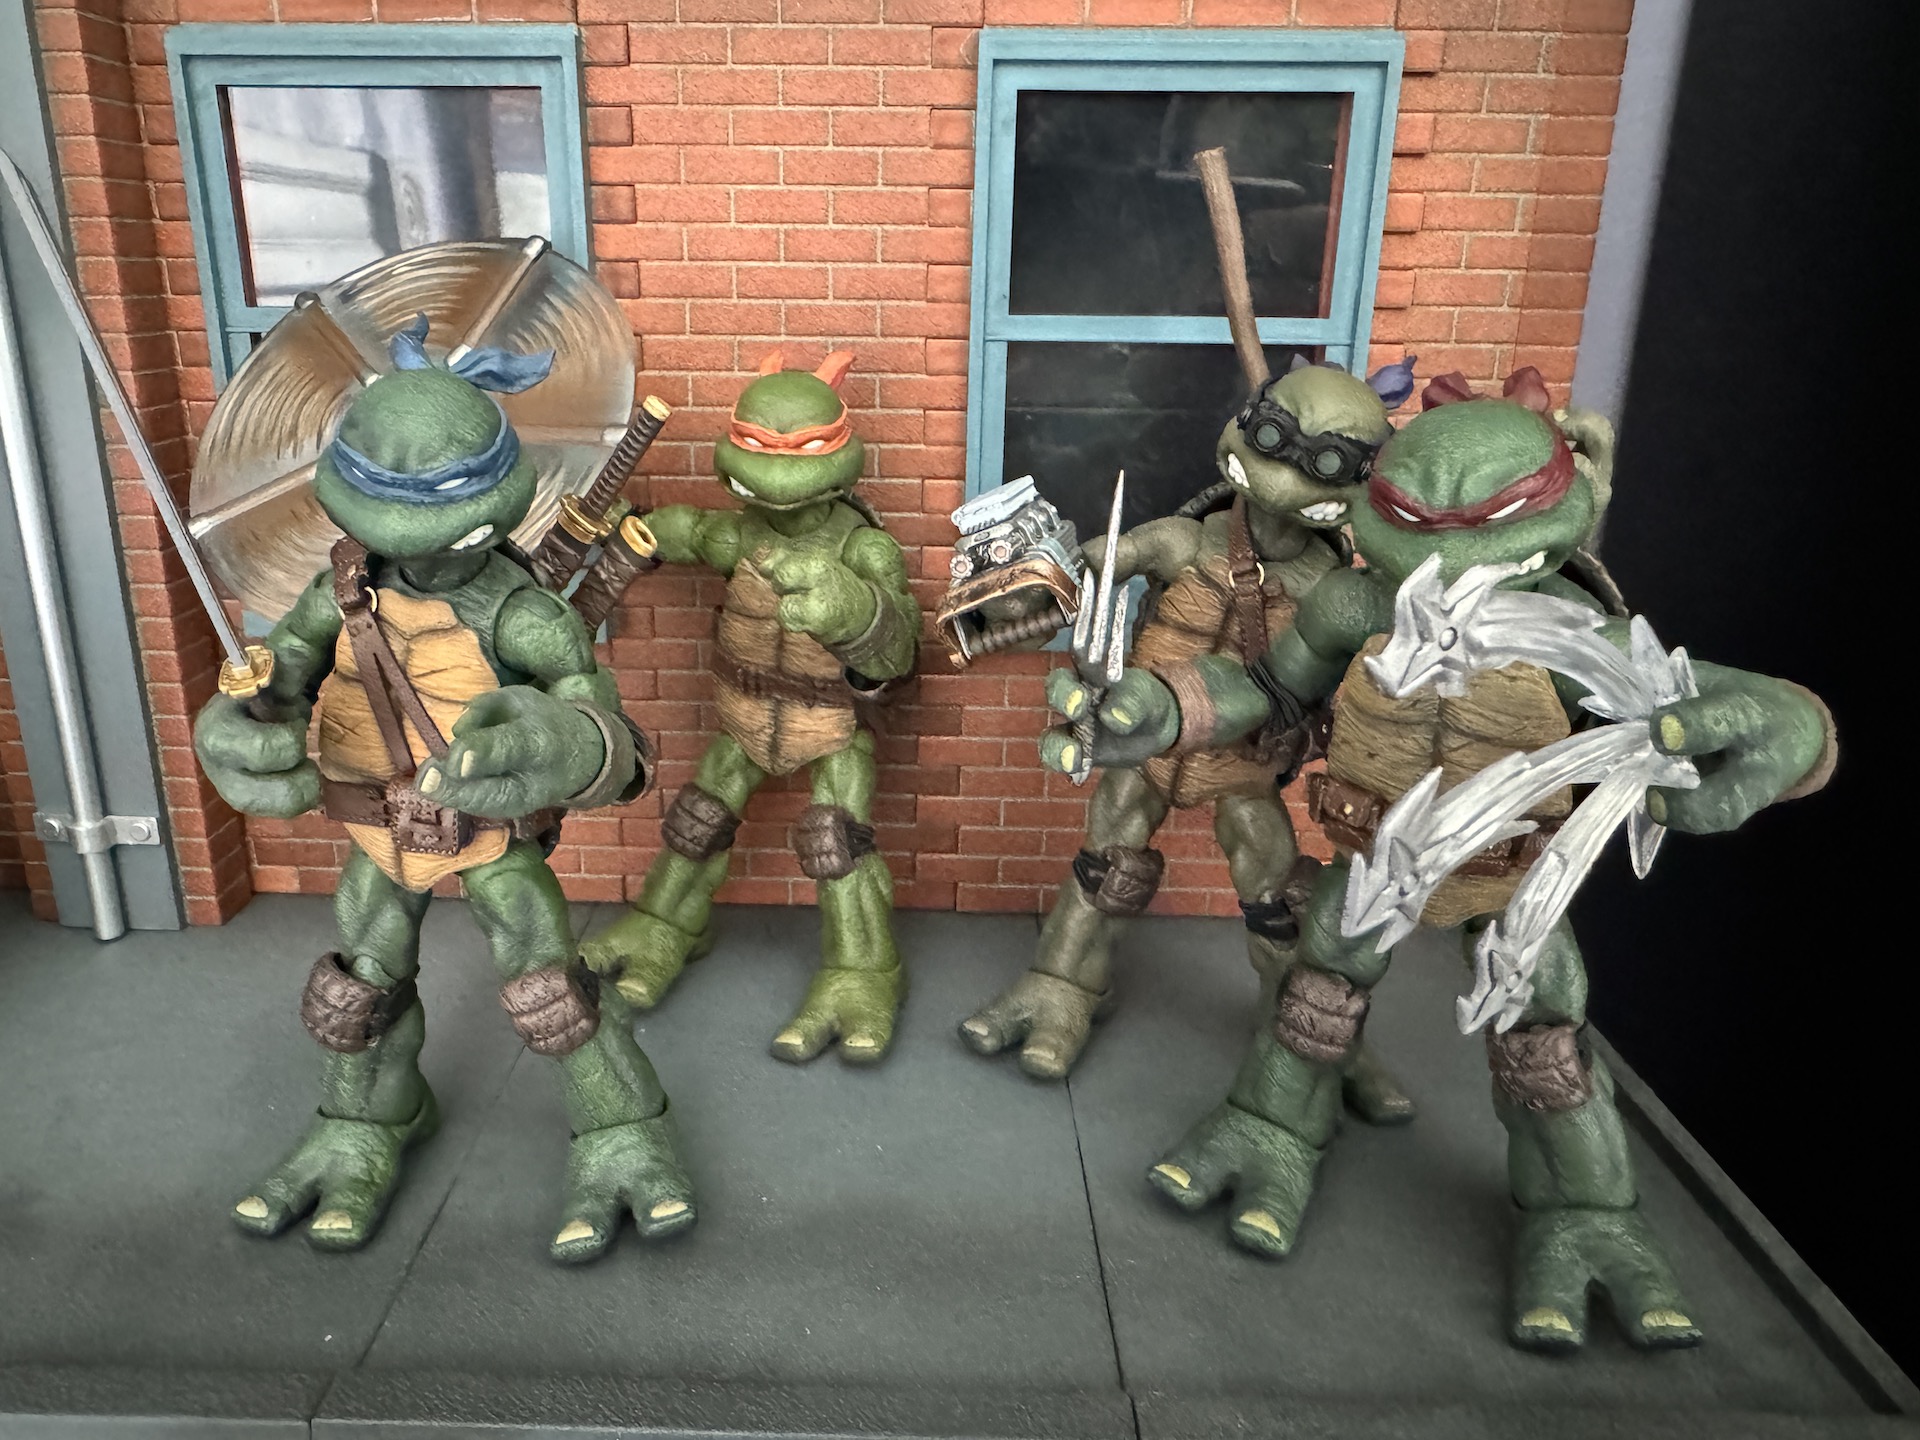 Mezco Teenage Mutant Ninja Turtles Deluxe Boxed Set review